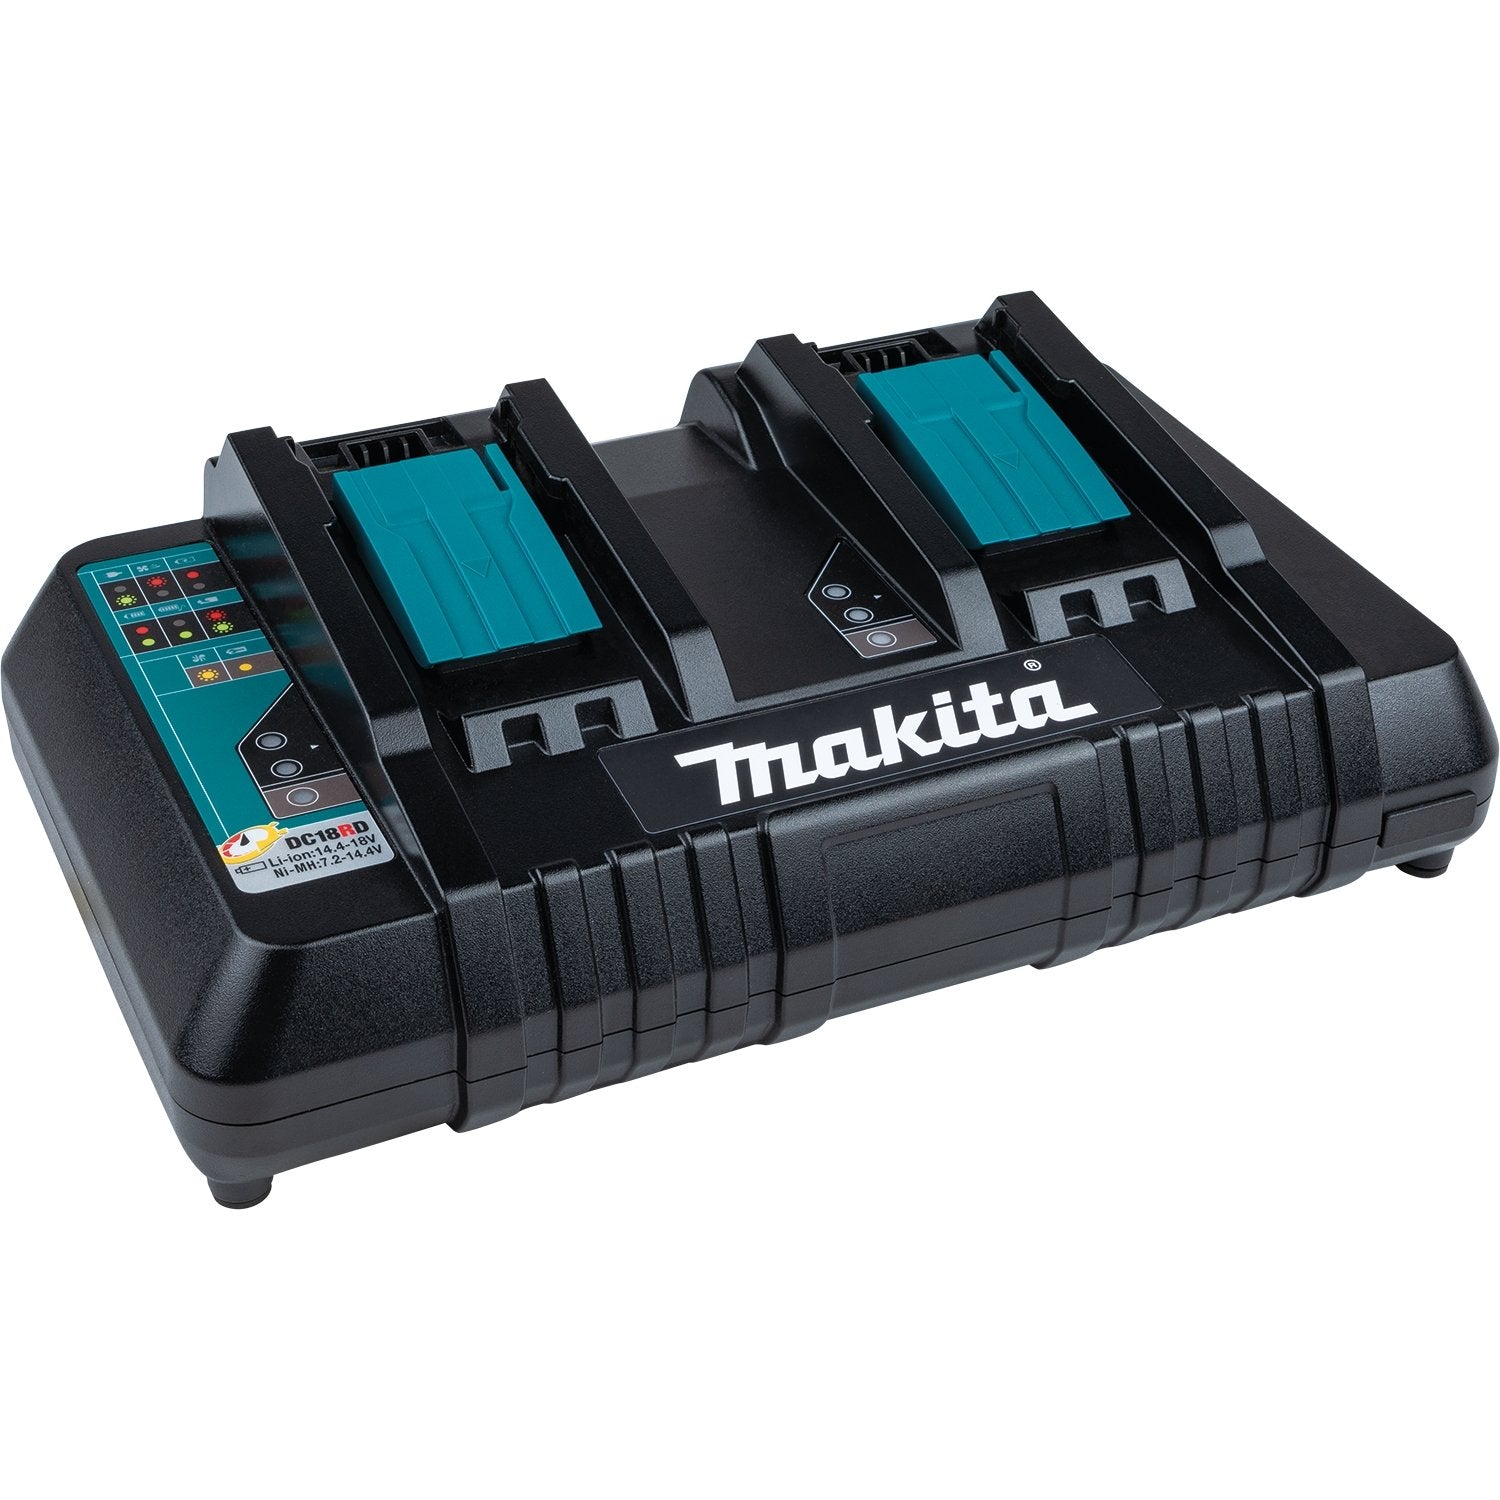 Makita 18V LXT Dual Port Rapid Optimum Charger | Arco Lawn Equipment